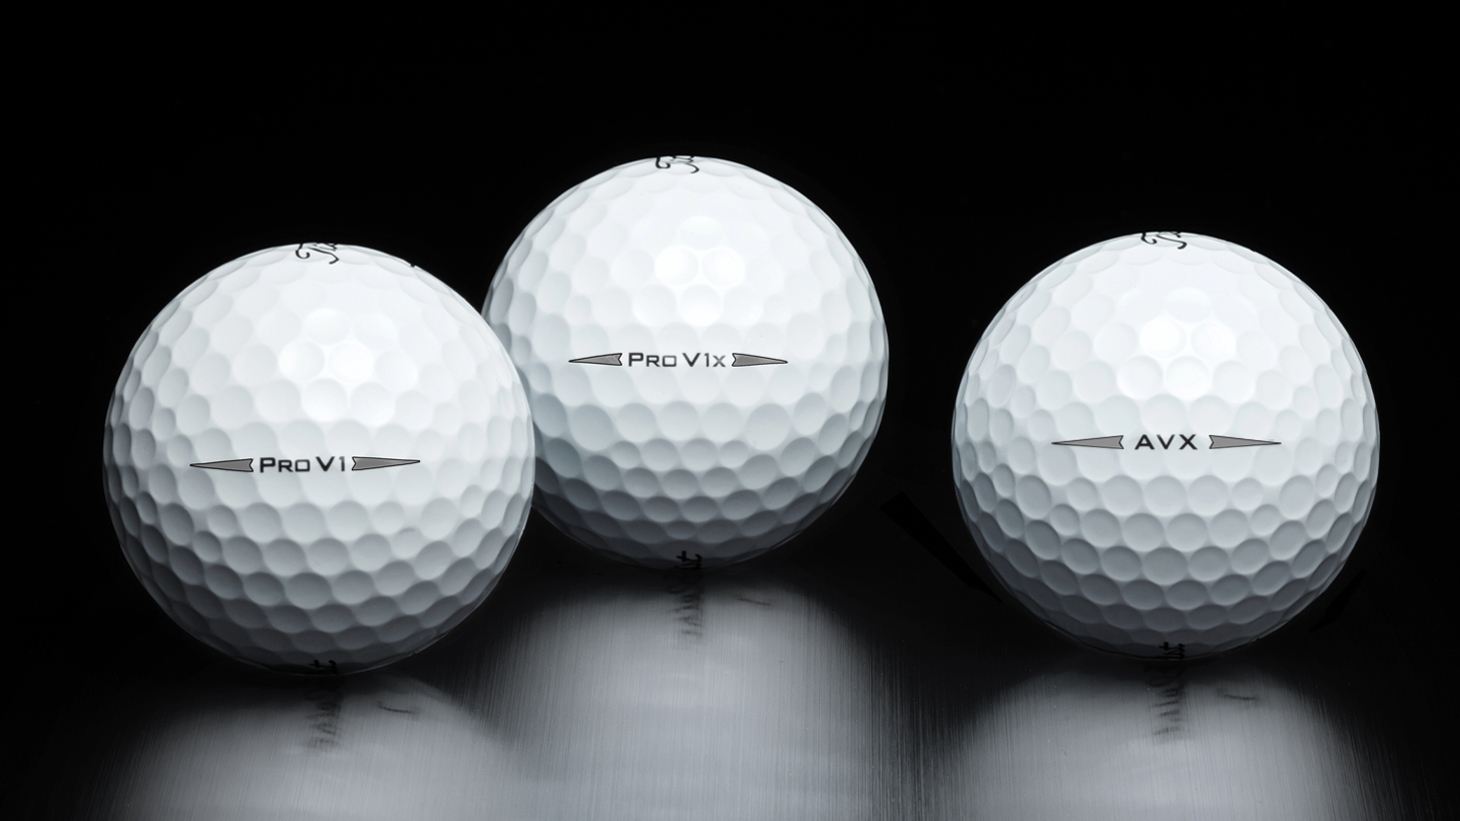 Image of Pro V1, Pro V1x and AVX single golf balls with sidestamps